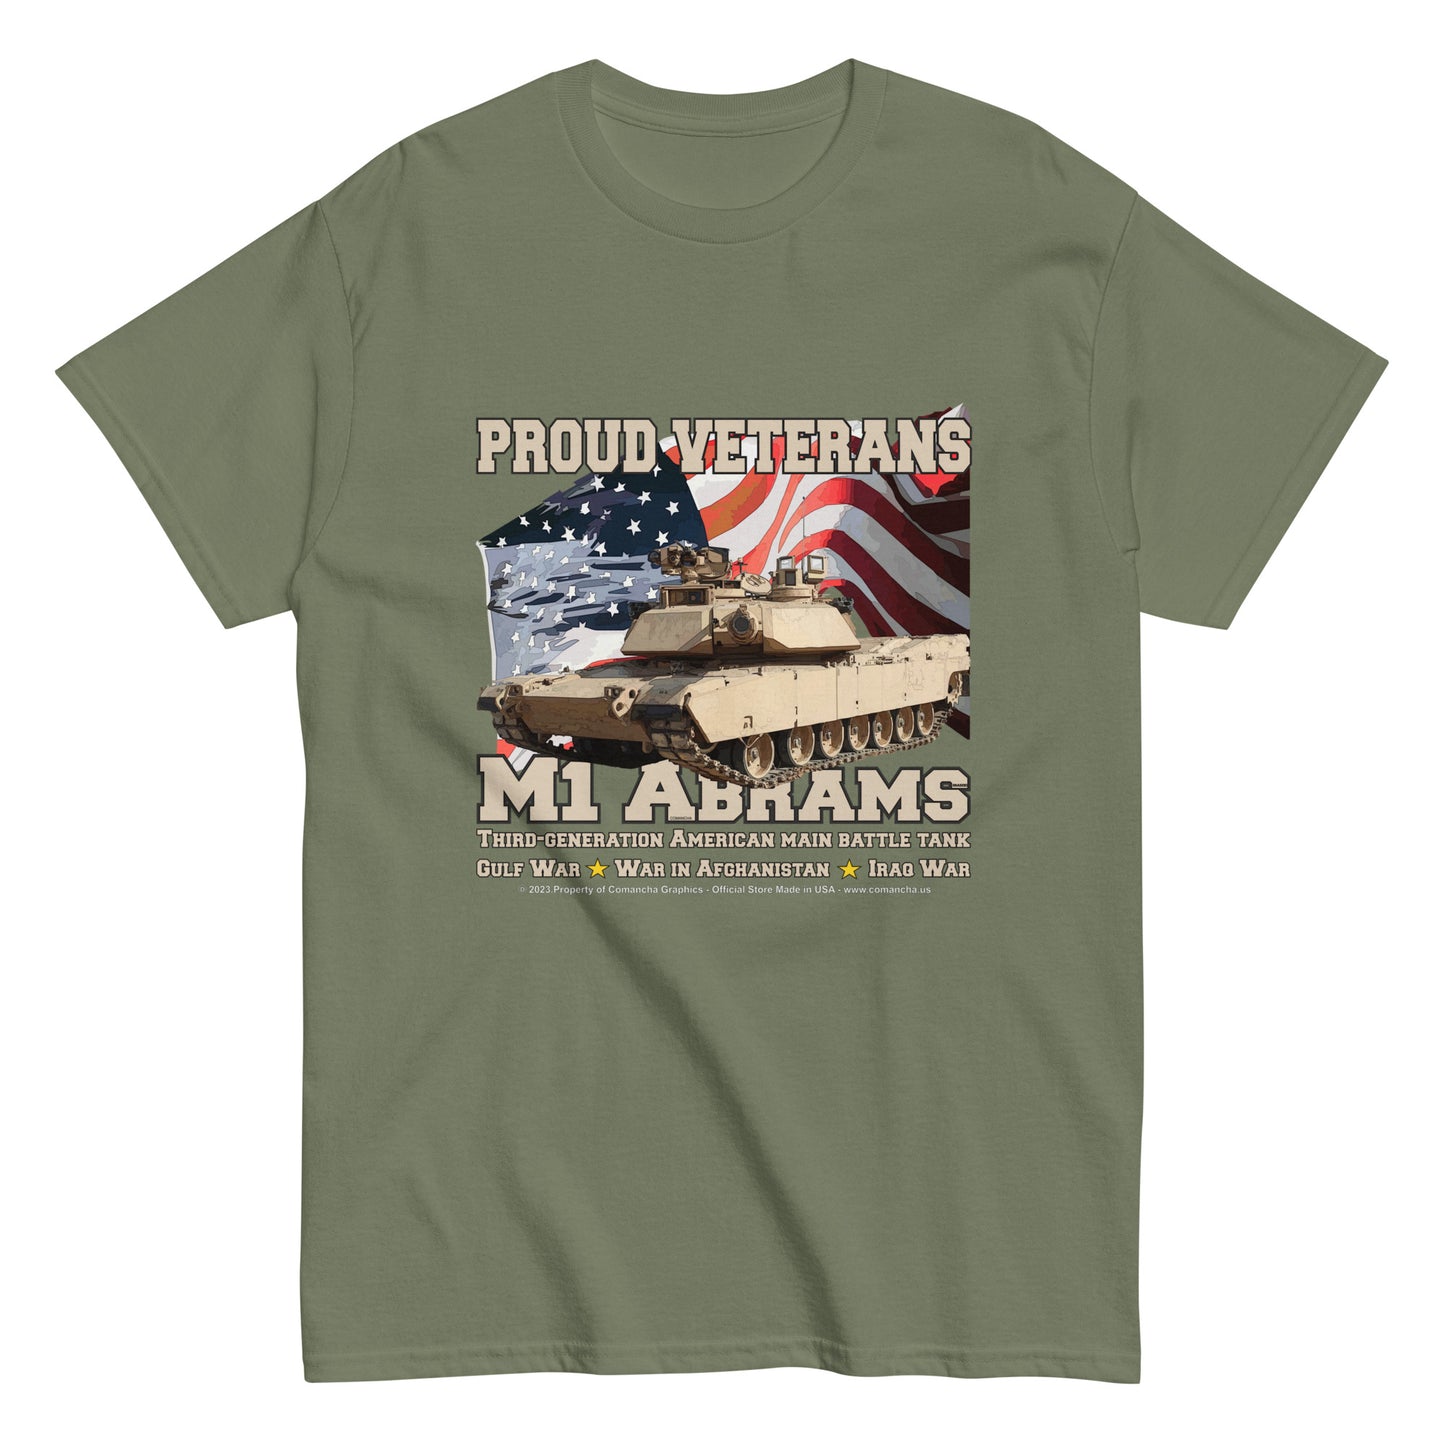 M1 Abrams Veterans tee,M1 Abrams t-shirt,M1 Abrams tank t-shirt,us army t-shirt,comancha,